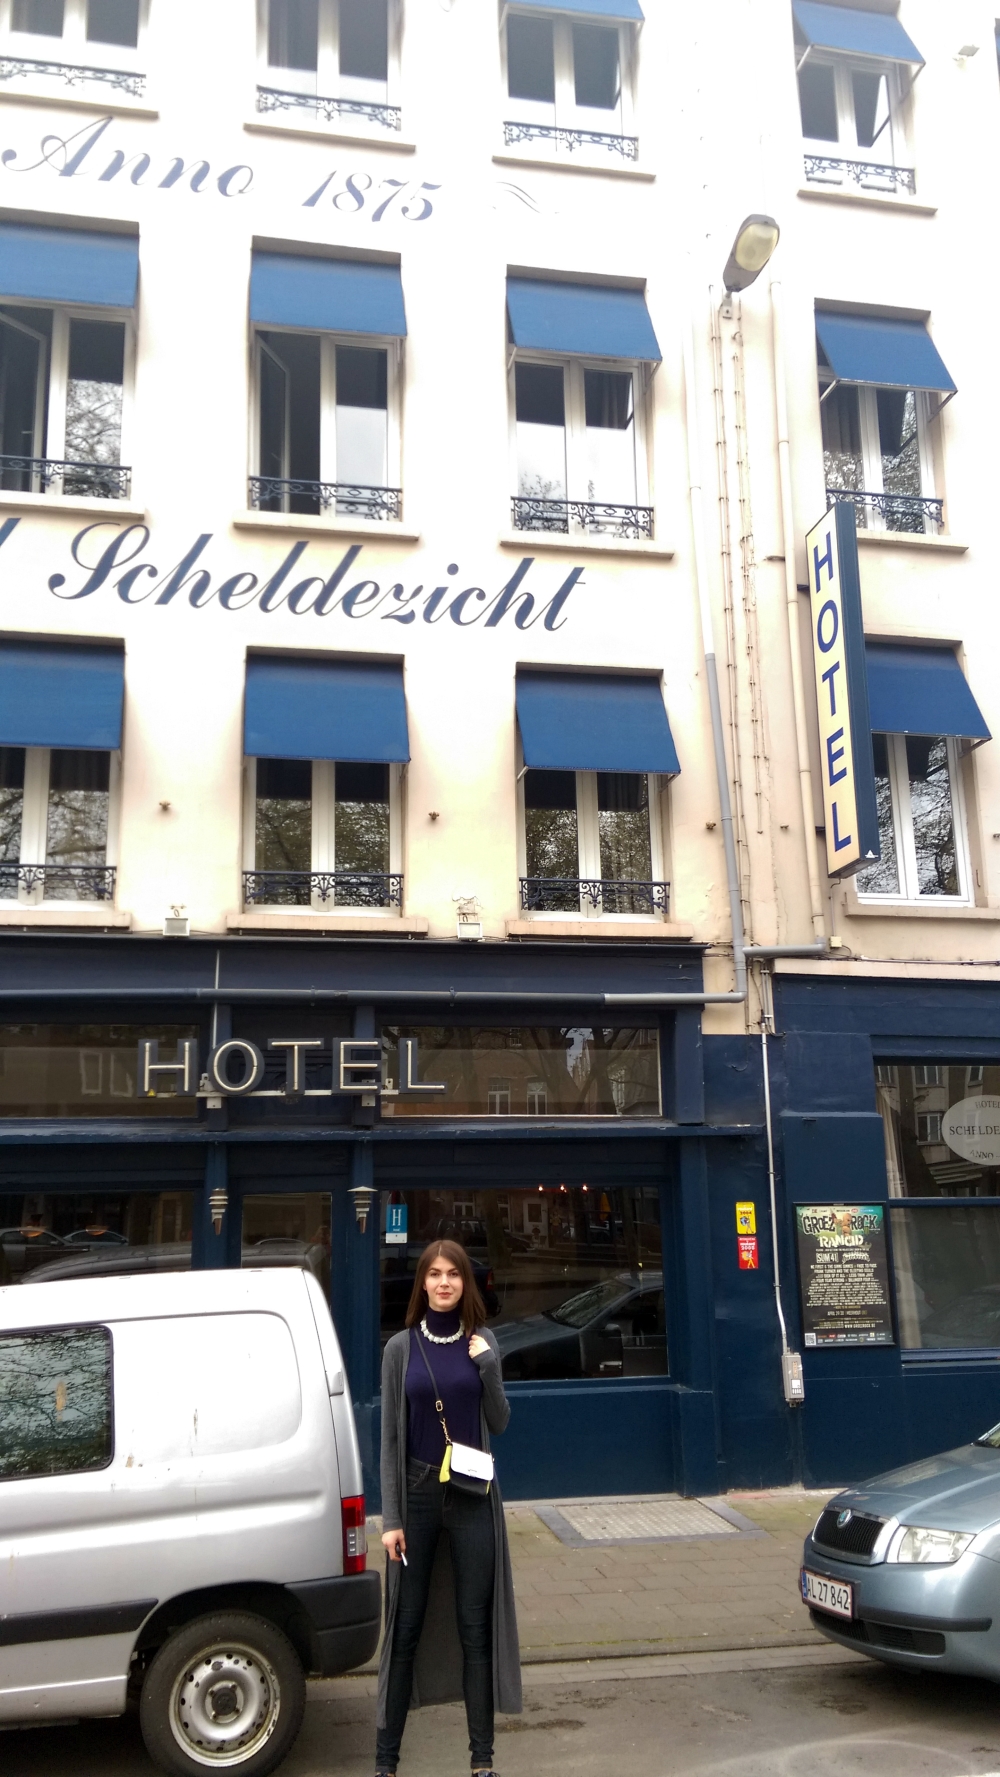 accommodation in Antwerp, where to stay in Antwerp, Scheldezich hotel opinions, glamthug blog,lifestyle blogger